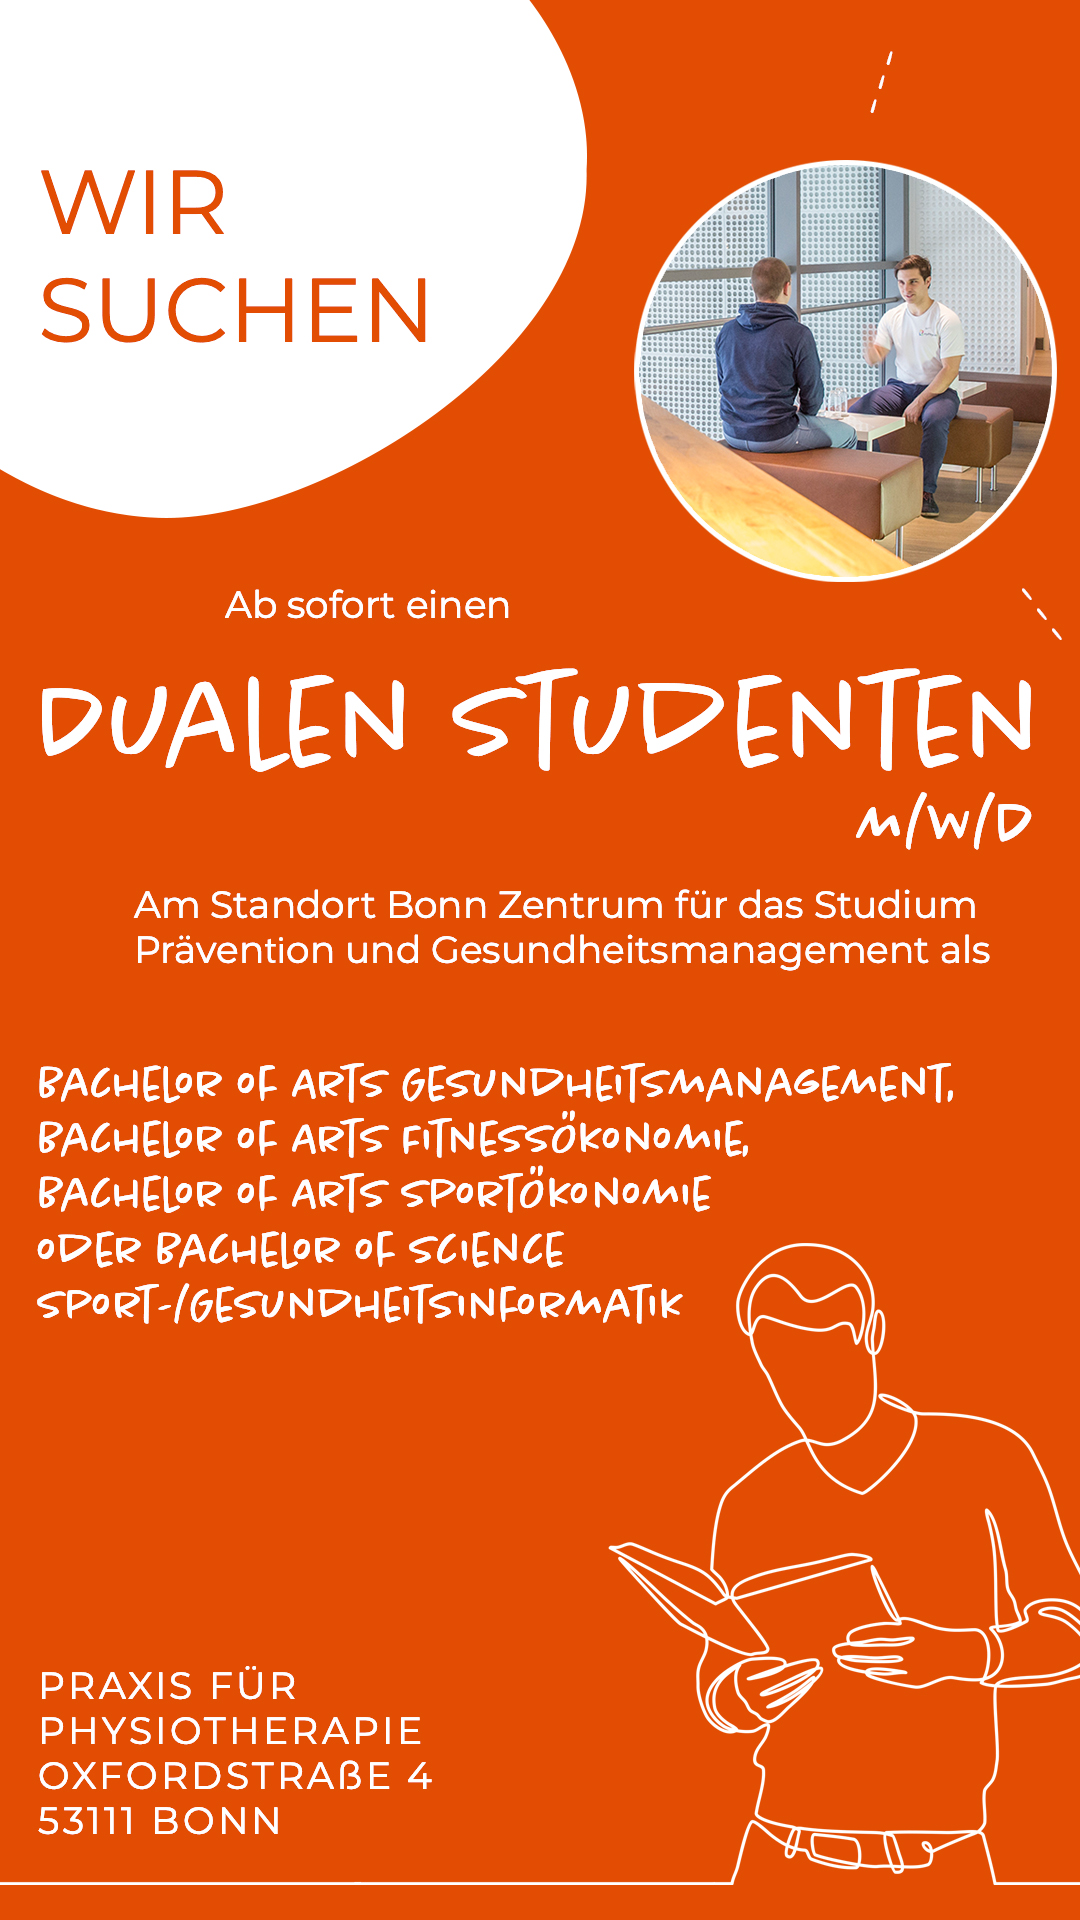 IG_Story_Dualer Student_Bonn_01